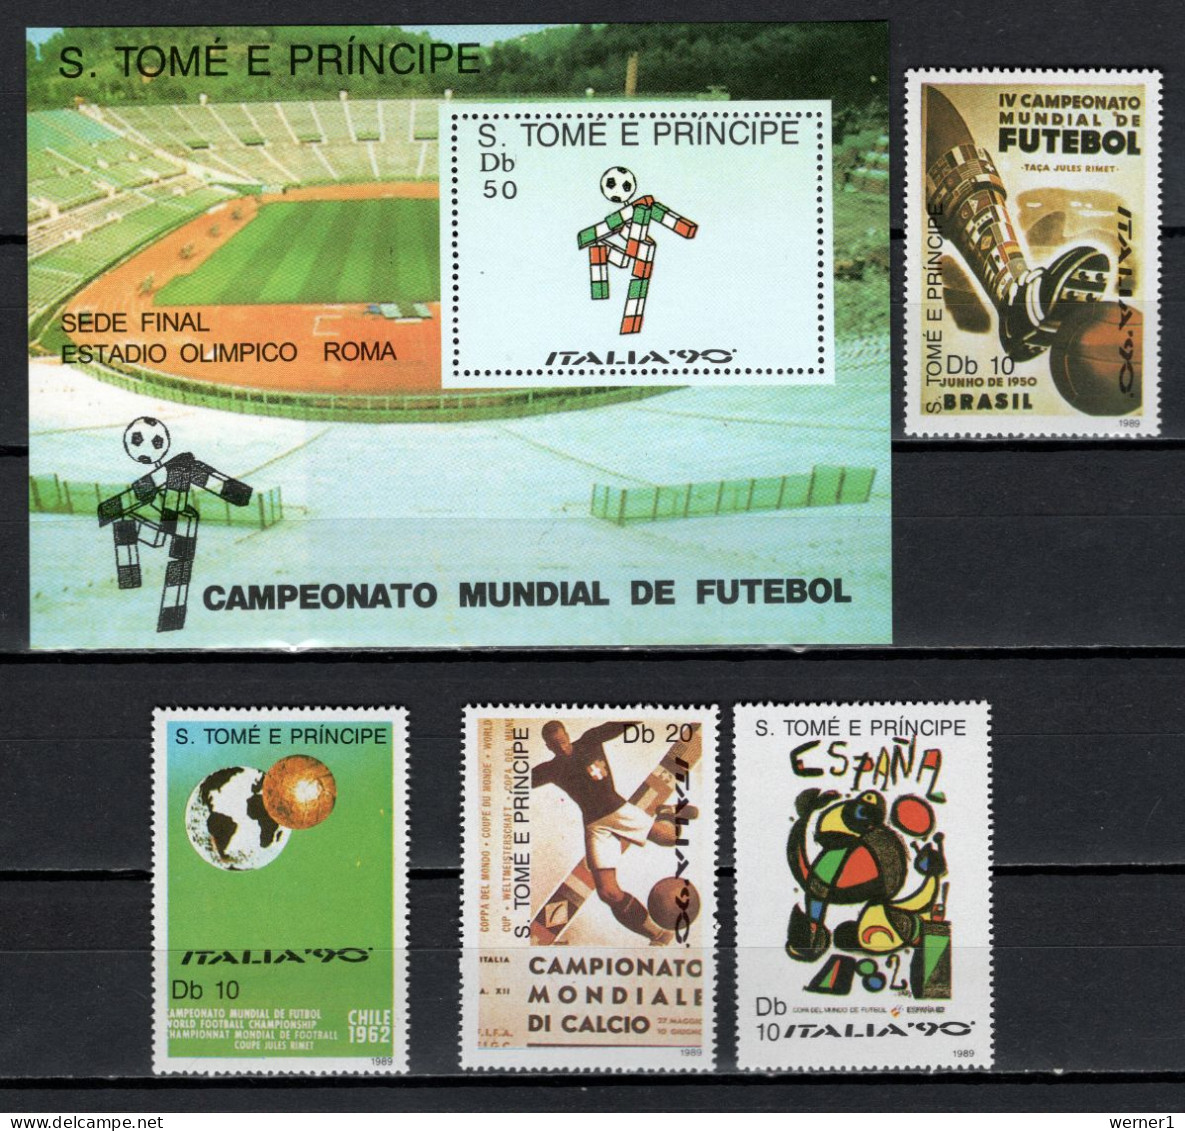 Sao Tome E Principe (St. Thomas & Prince) 1989 Football Soccer World Cup Set Of 4 + S/s MNH - 1990 – Italy